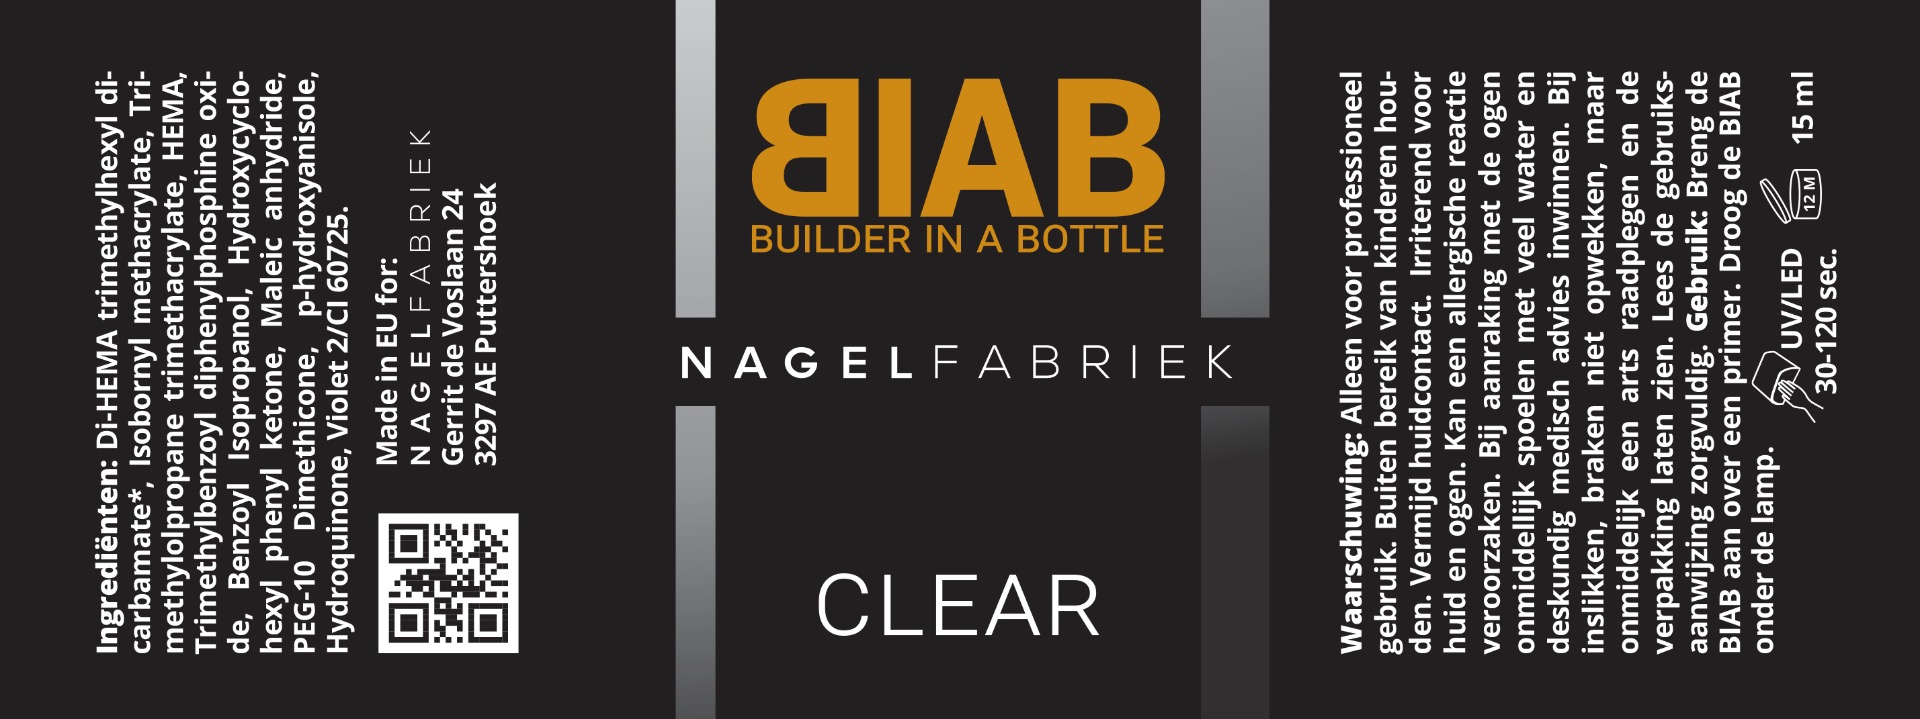 Label Builder In a Bottle Clear - BIAB